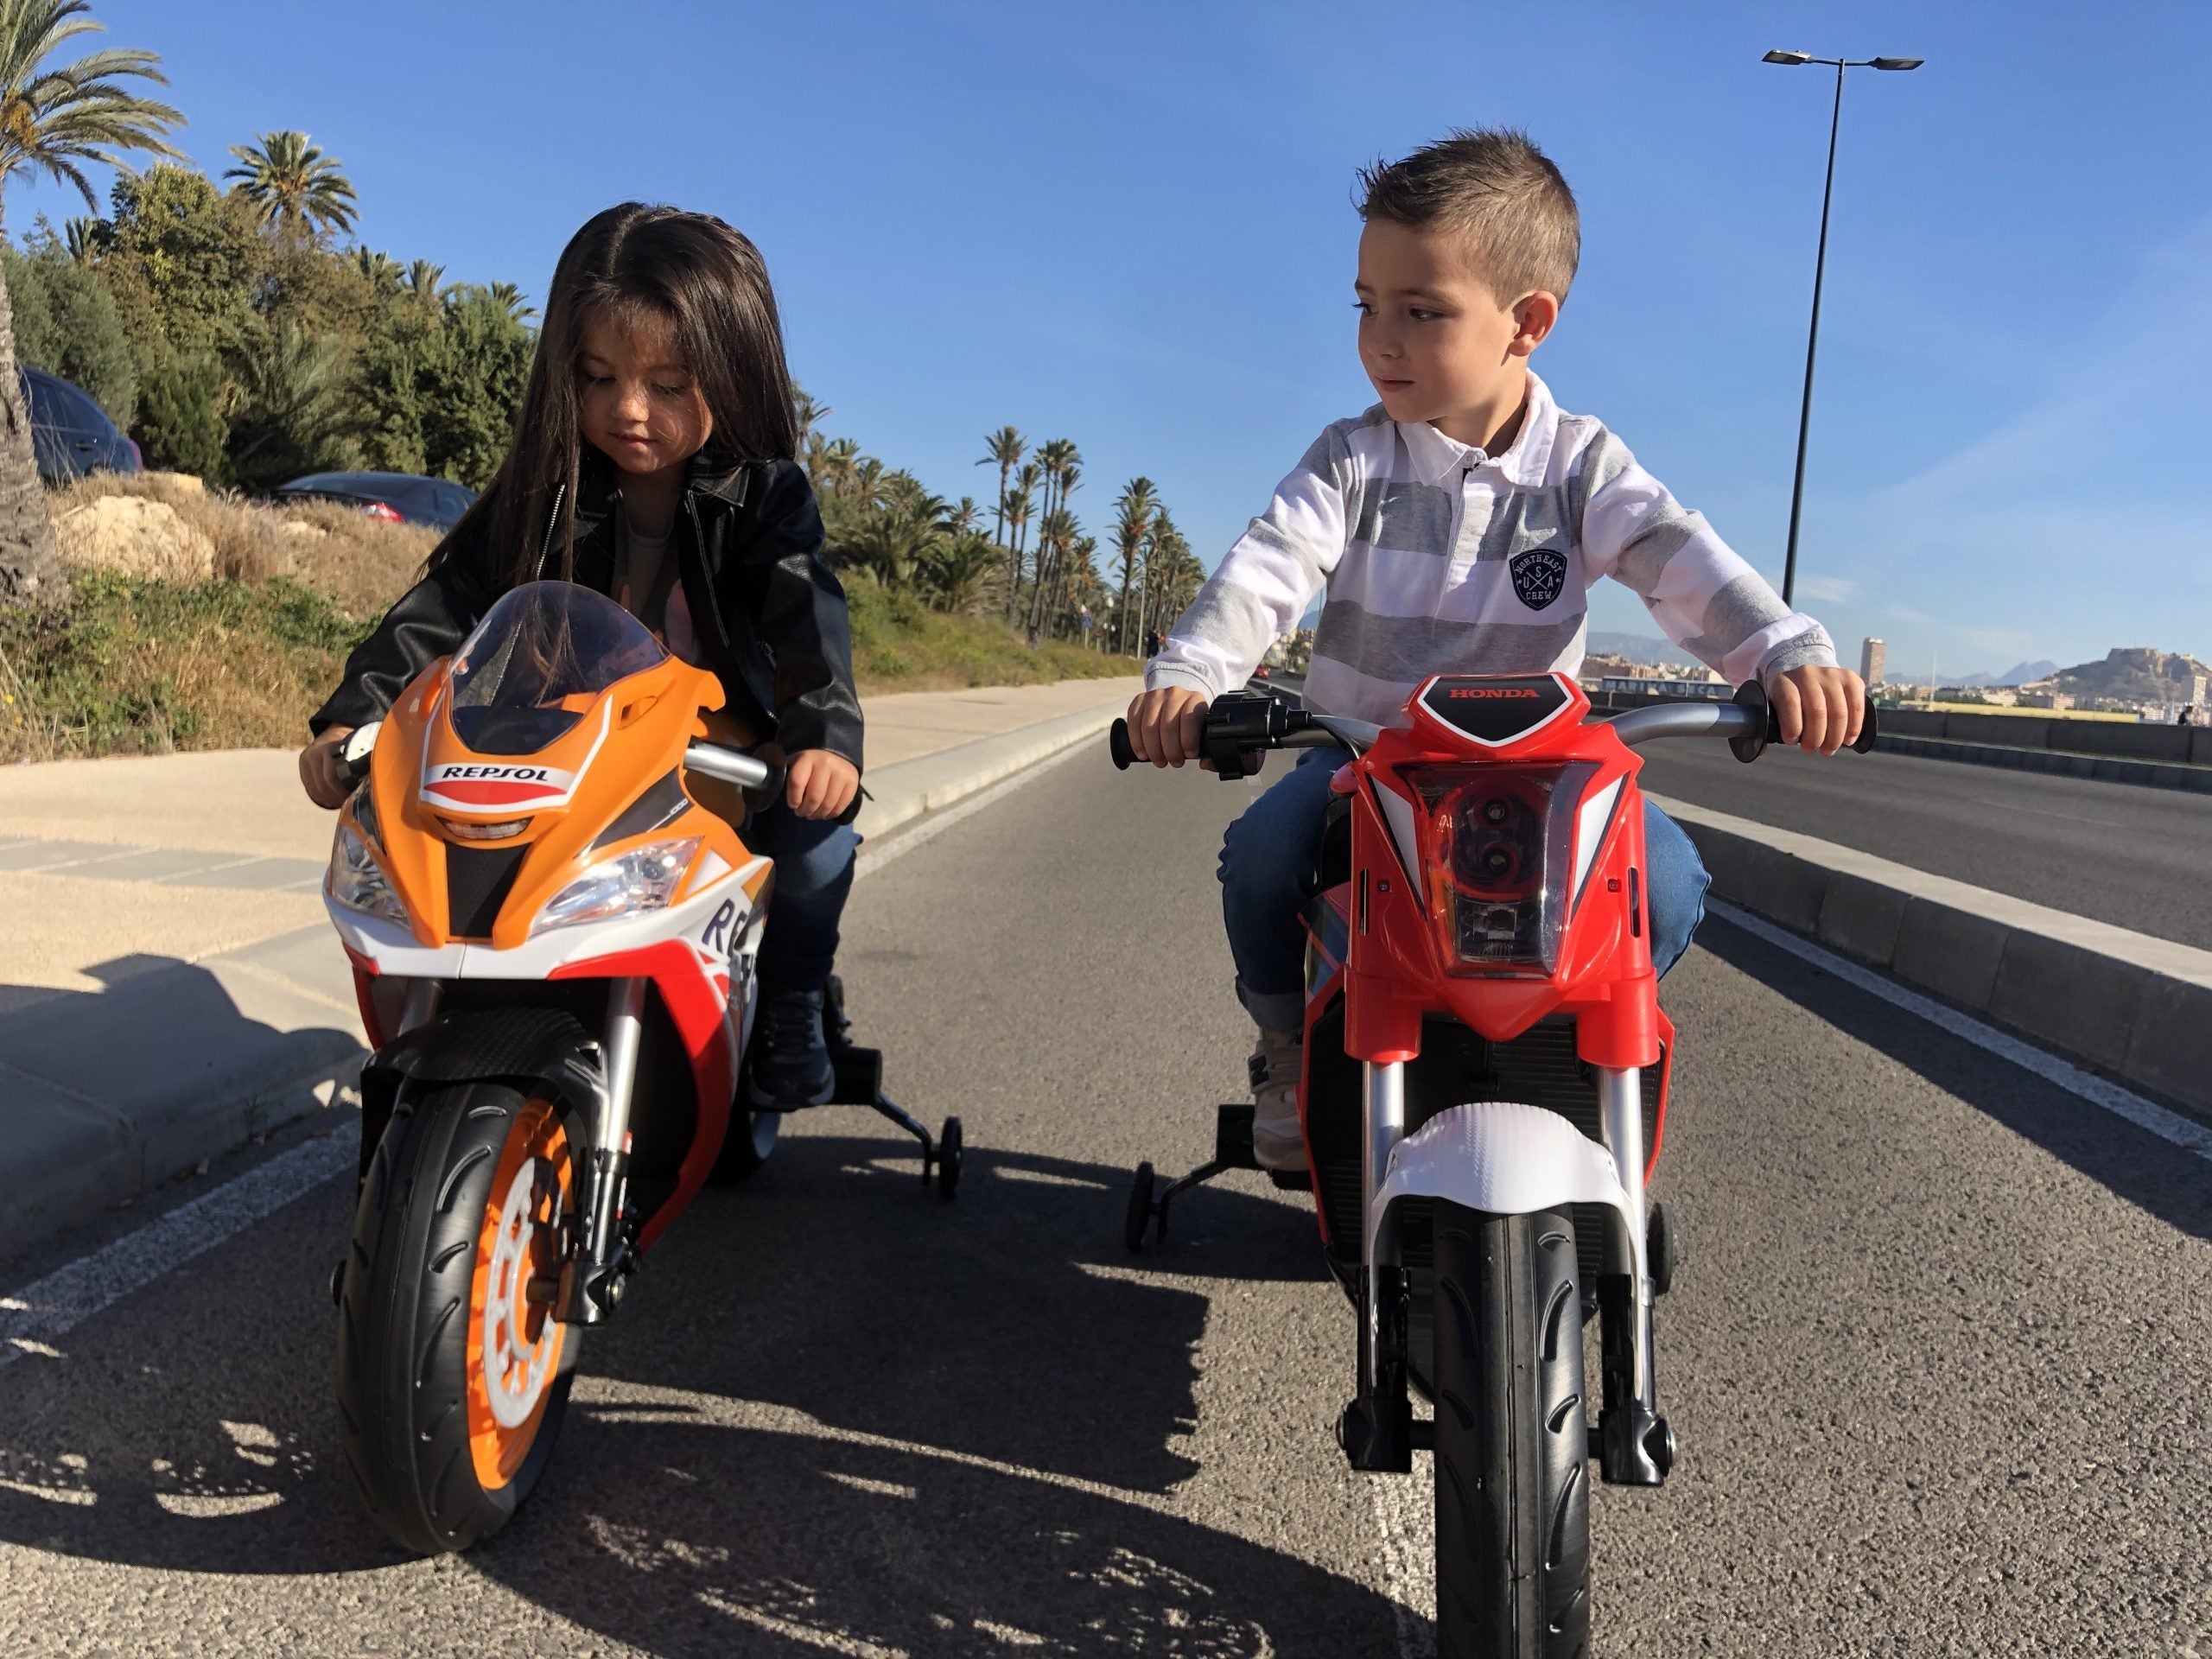 2023 Honda Naked Motorbike | 1 Seater > 12V (1x1) | Electric Riding Vehicle for Kids